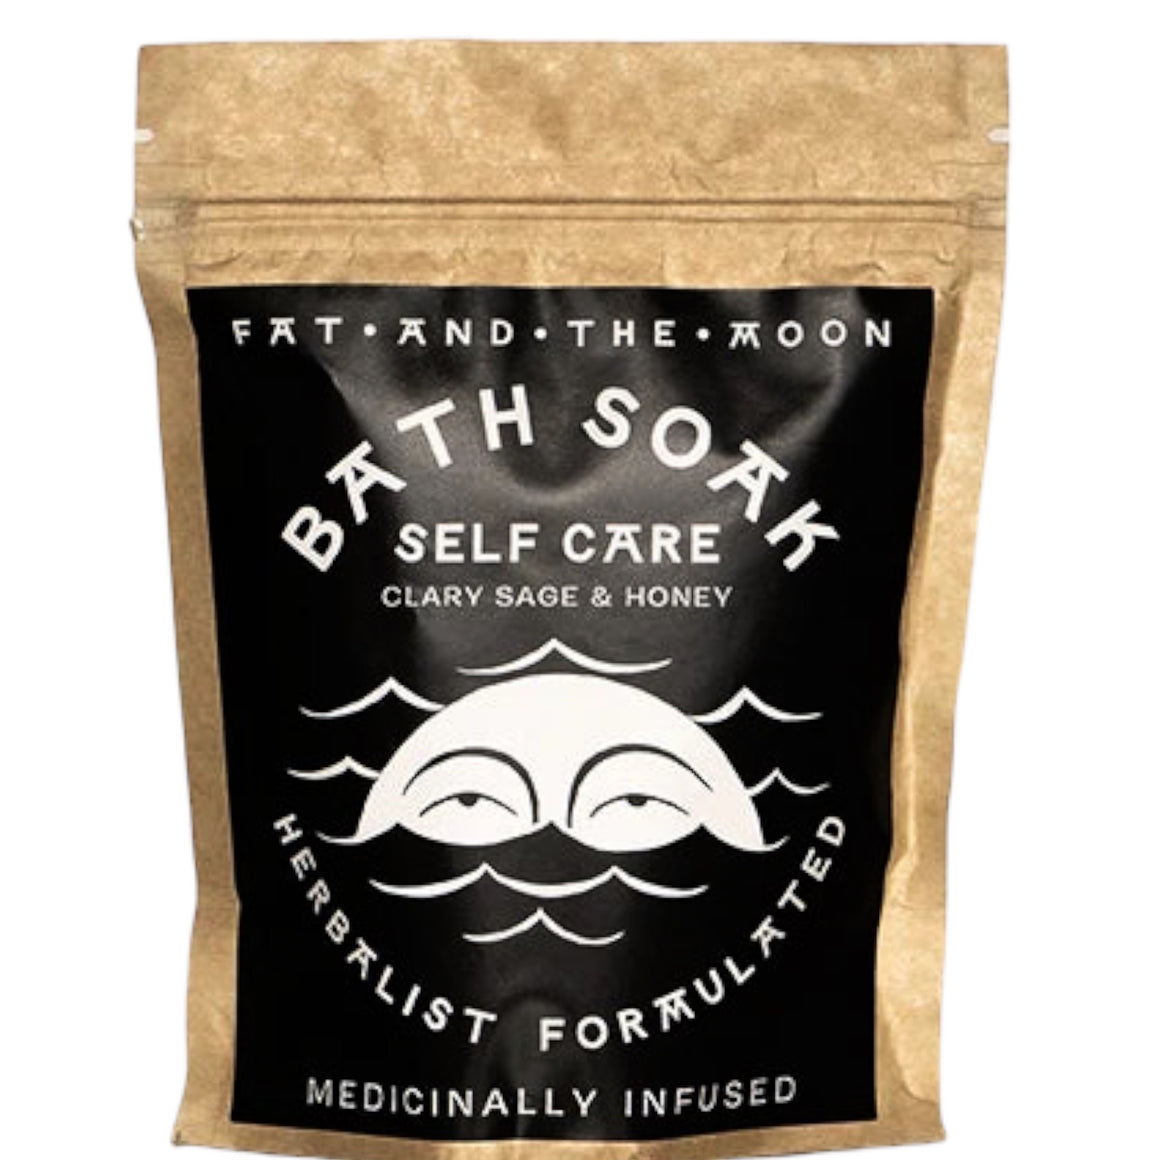 Bath Soak - Self Care - Fat & The Moon 6oz